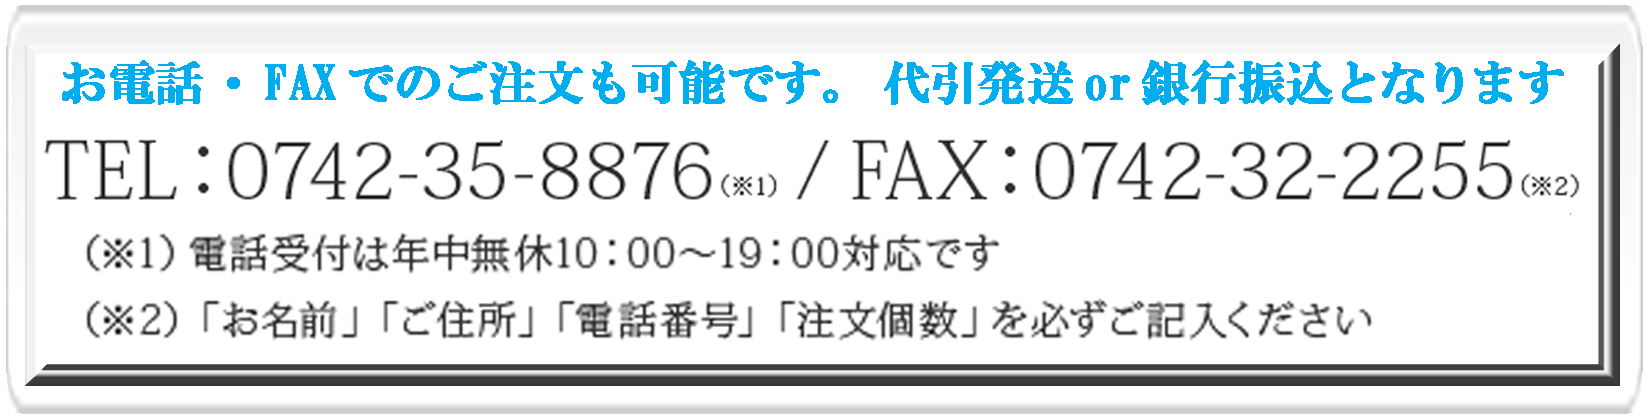 denwa-fax3.gif